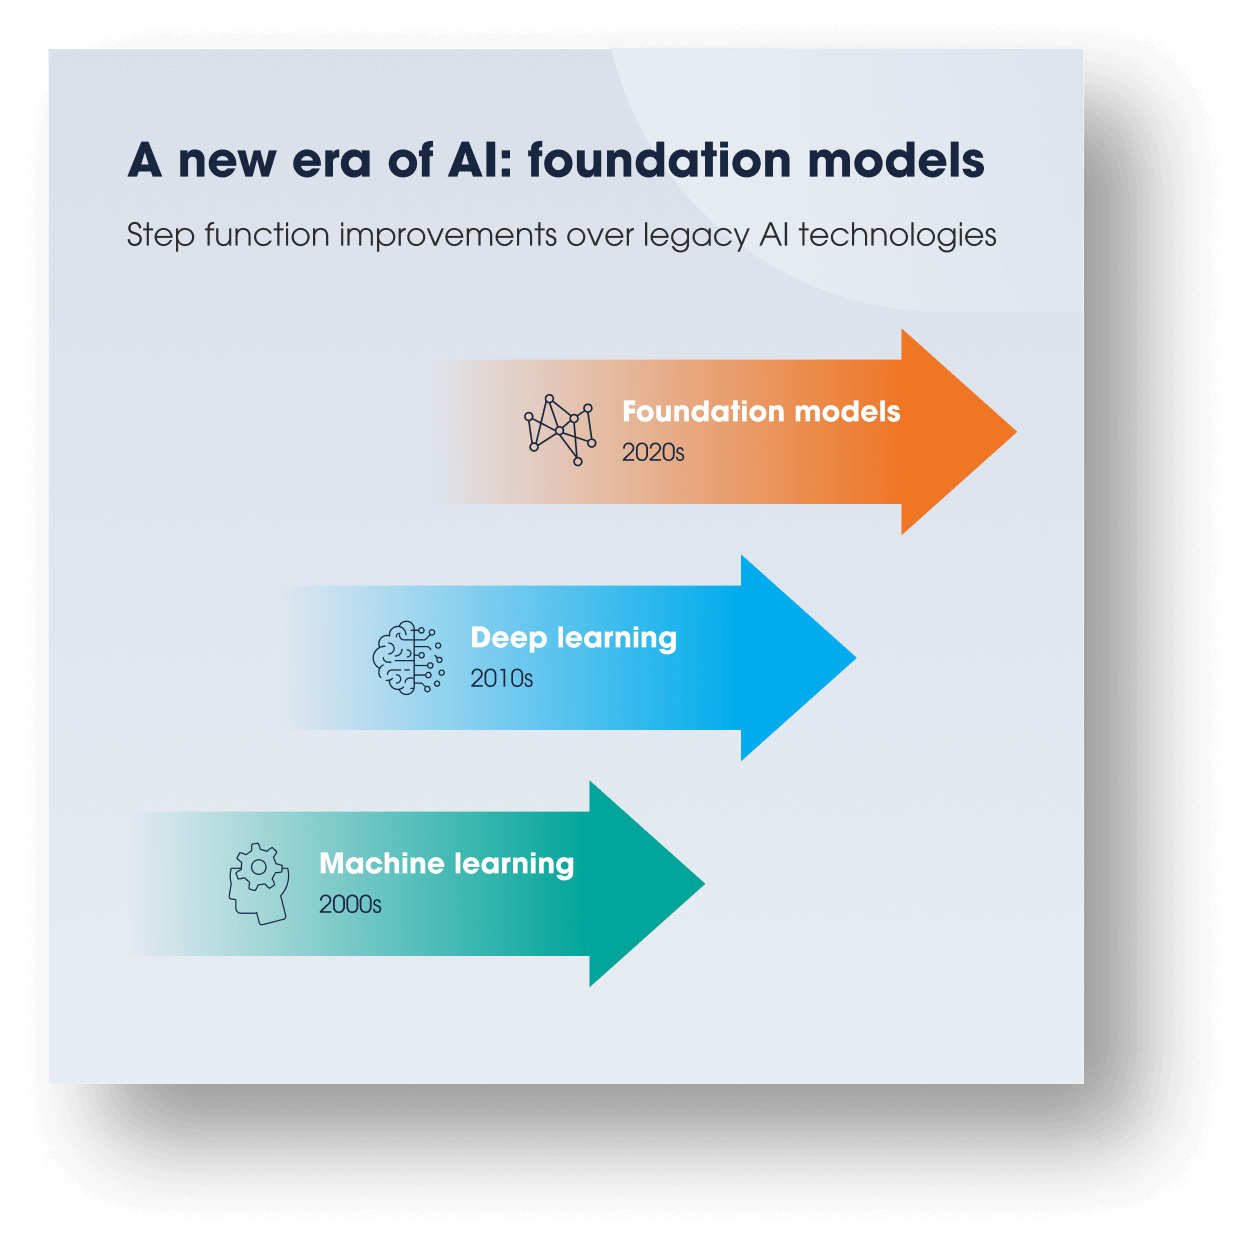 A new era of AI: foundation models